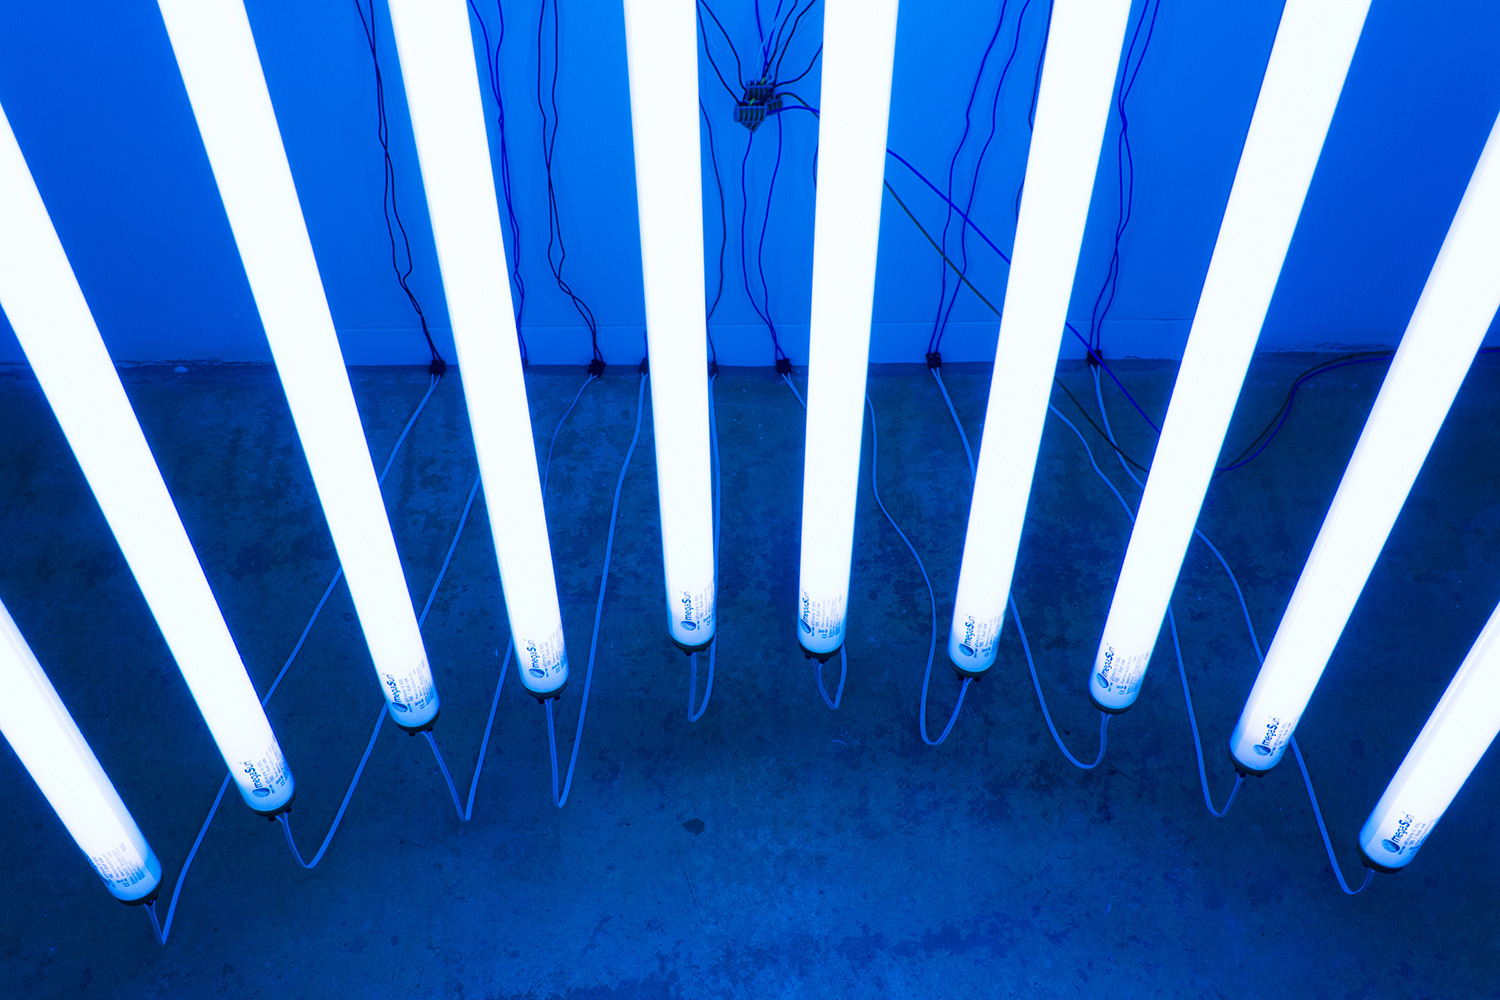 Get Your Ten On - Michael Niemetz - light installation - seen at Gallery Charim Events 2016